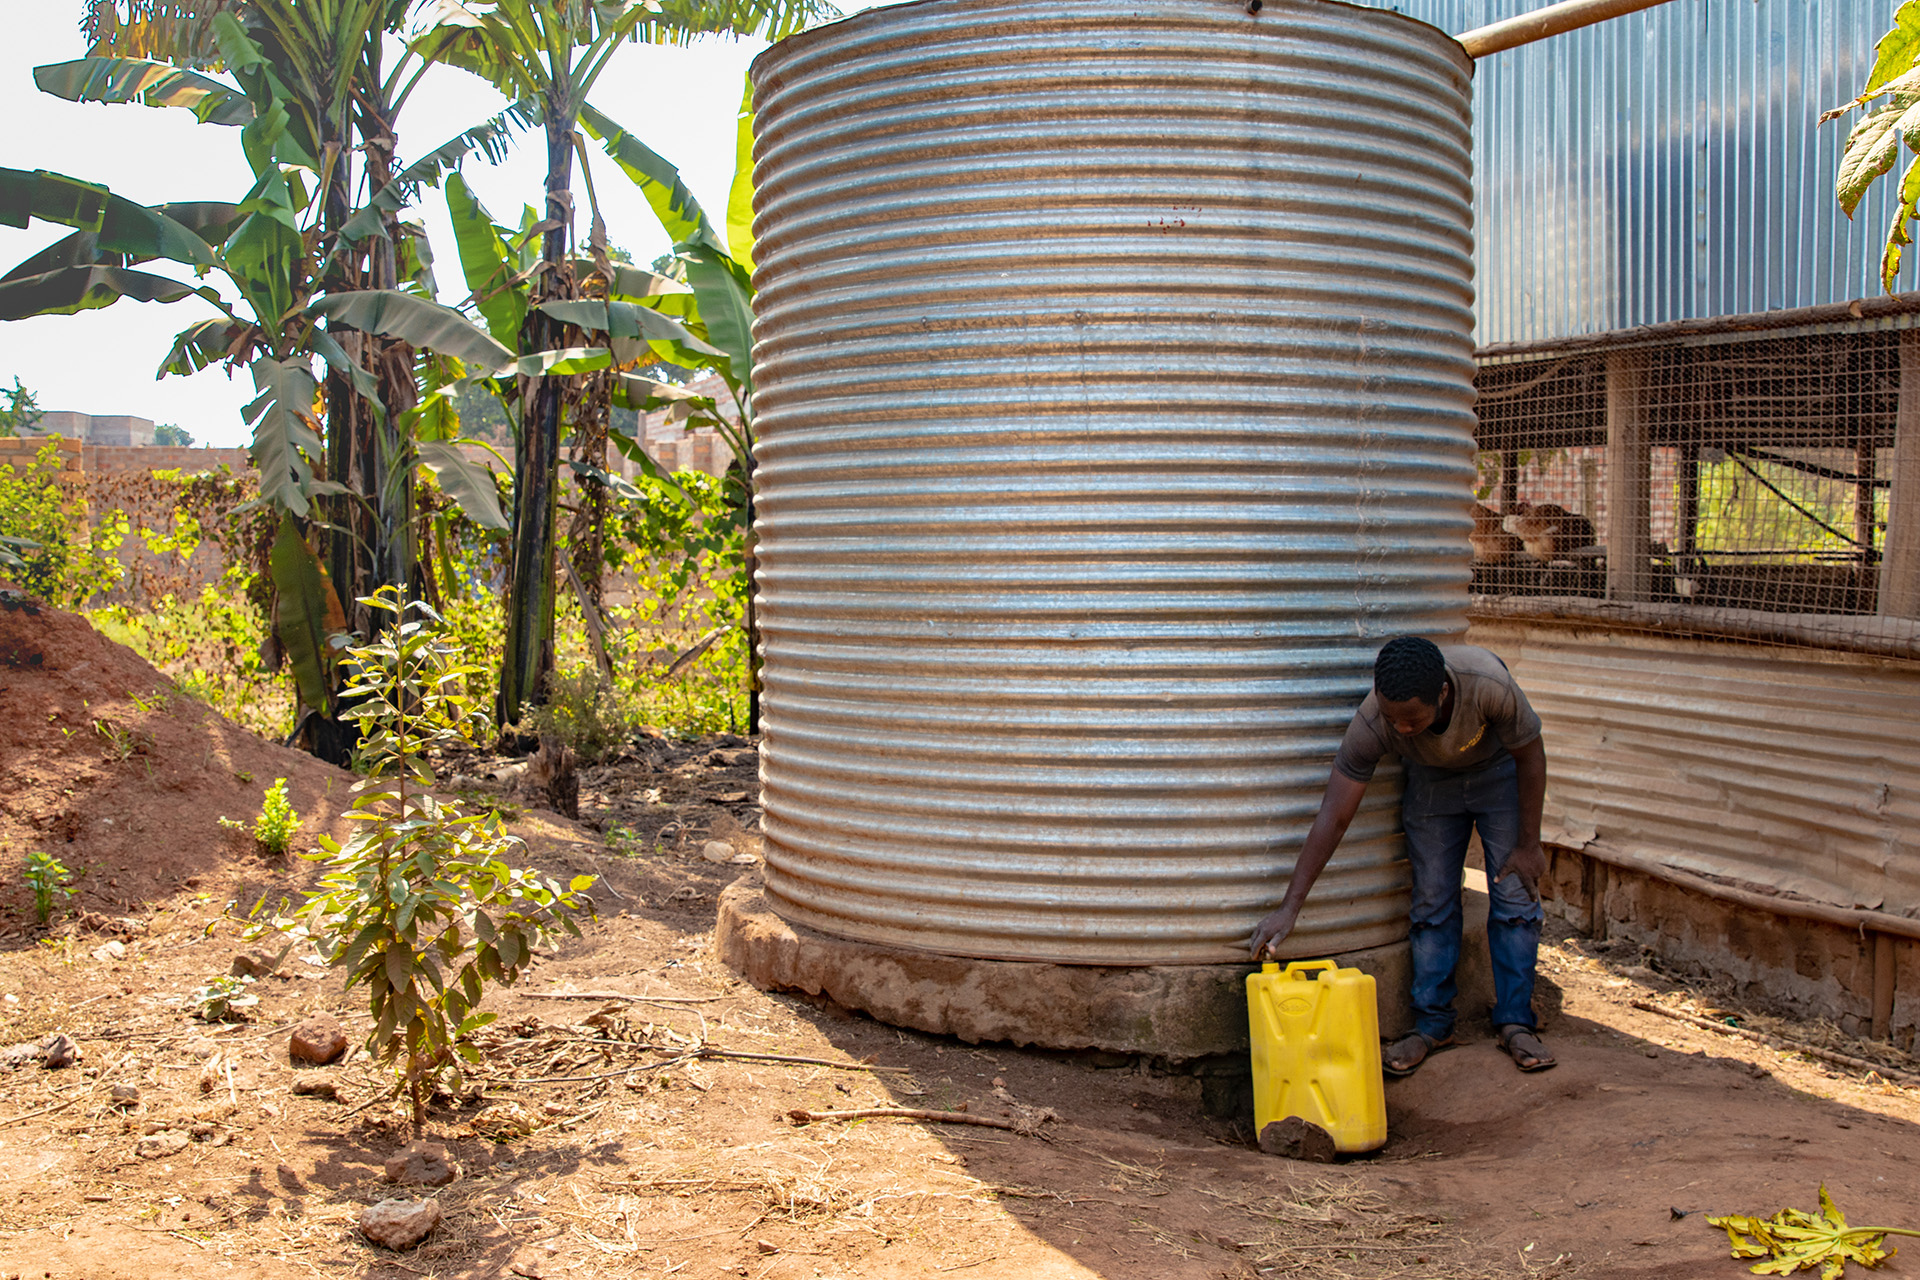 Farmer filling up water gallon outside chicken coop, Uganda